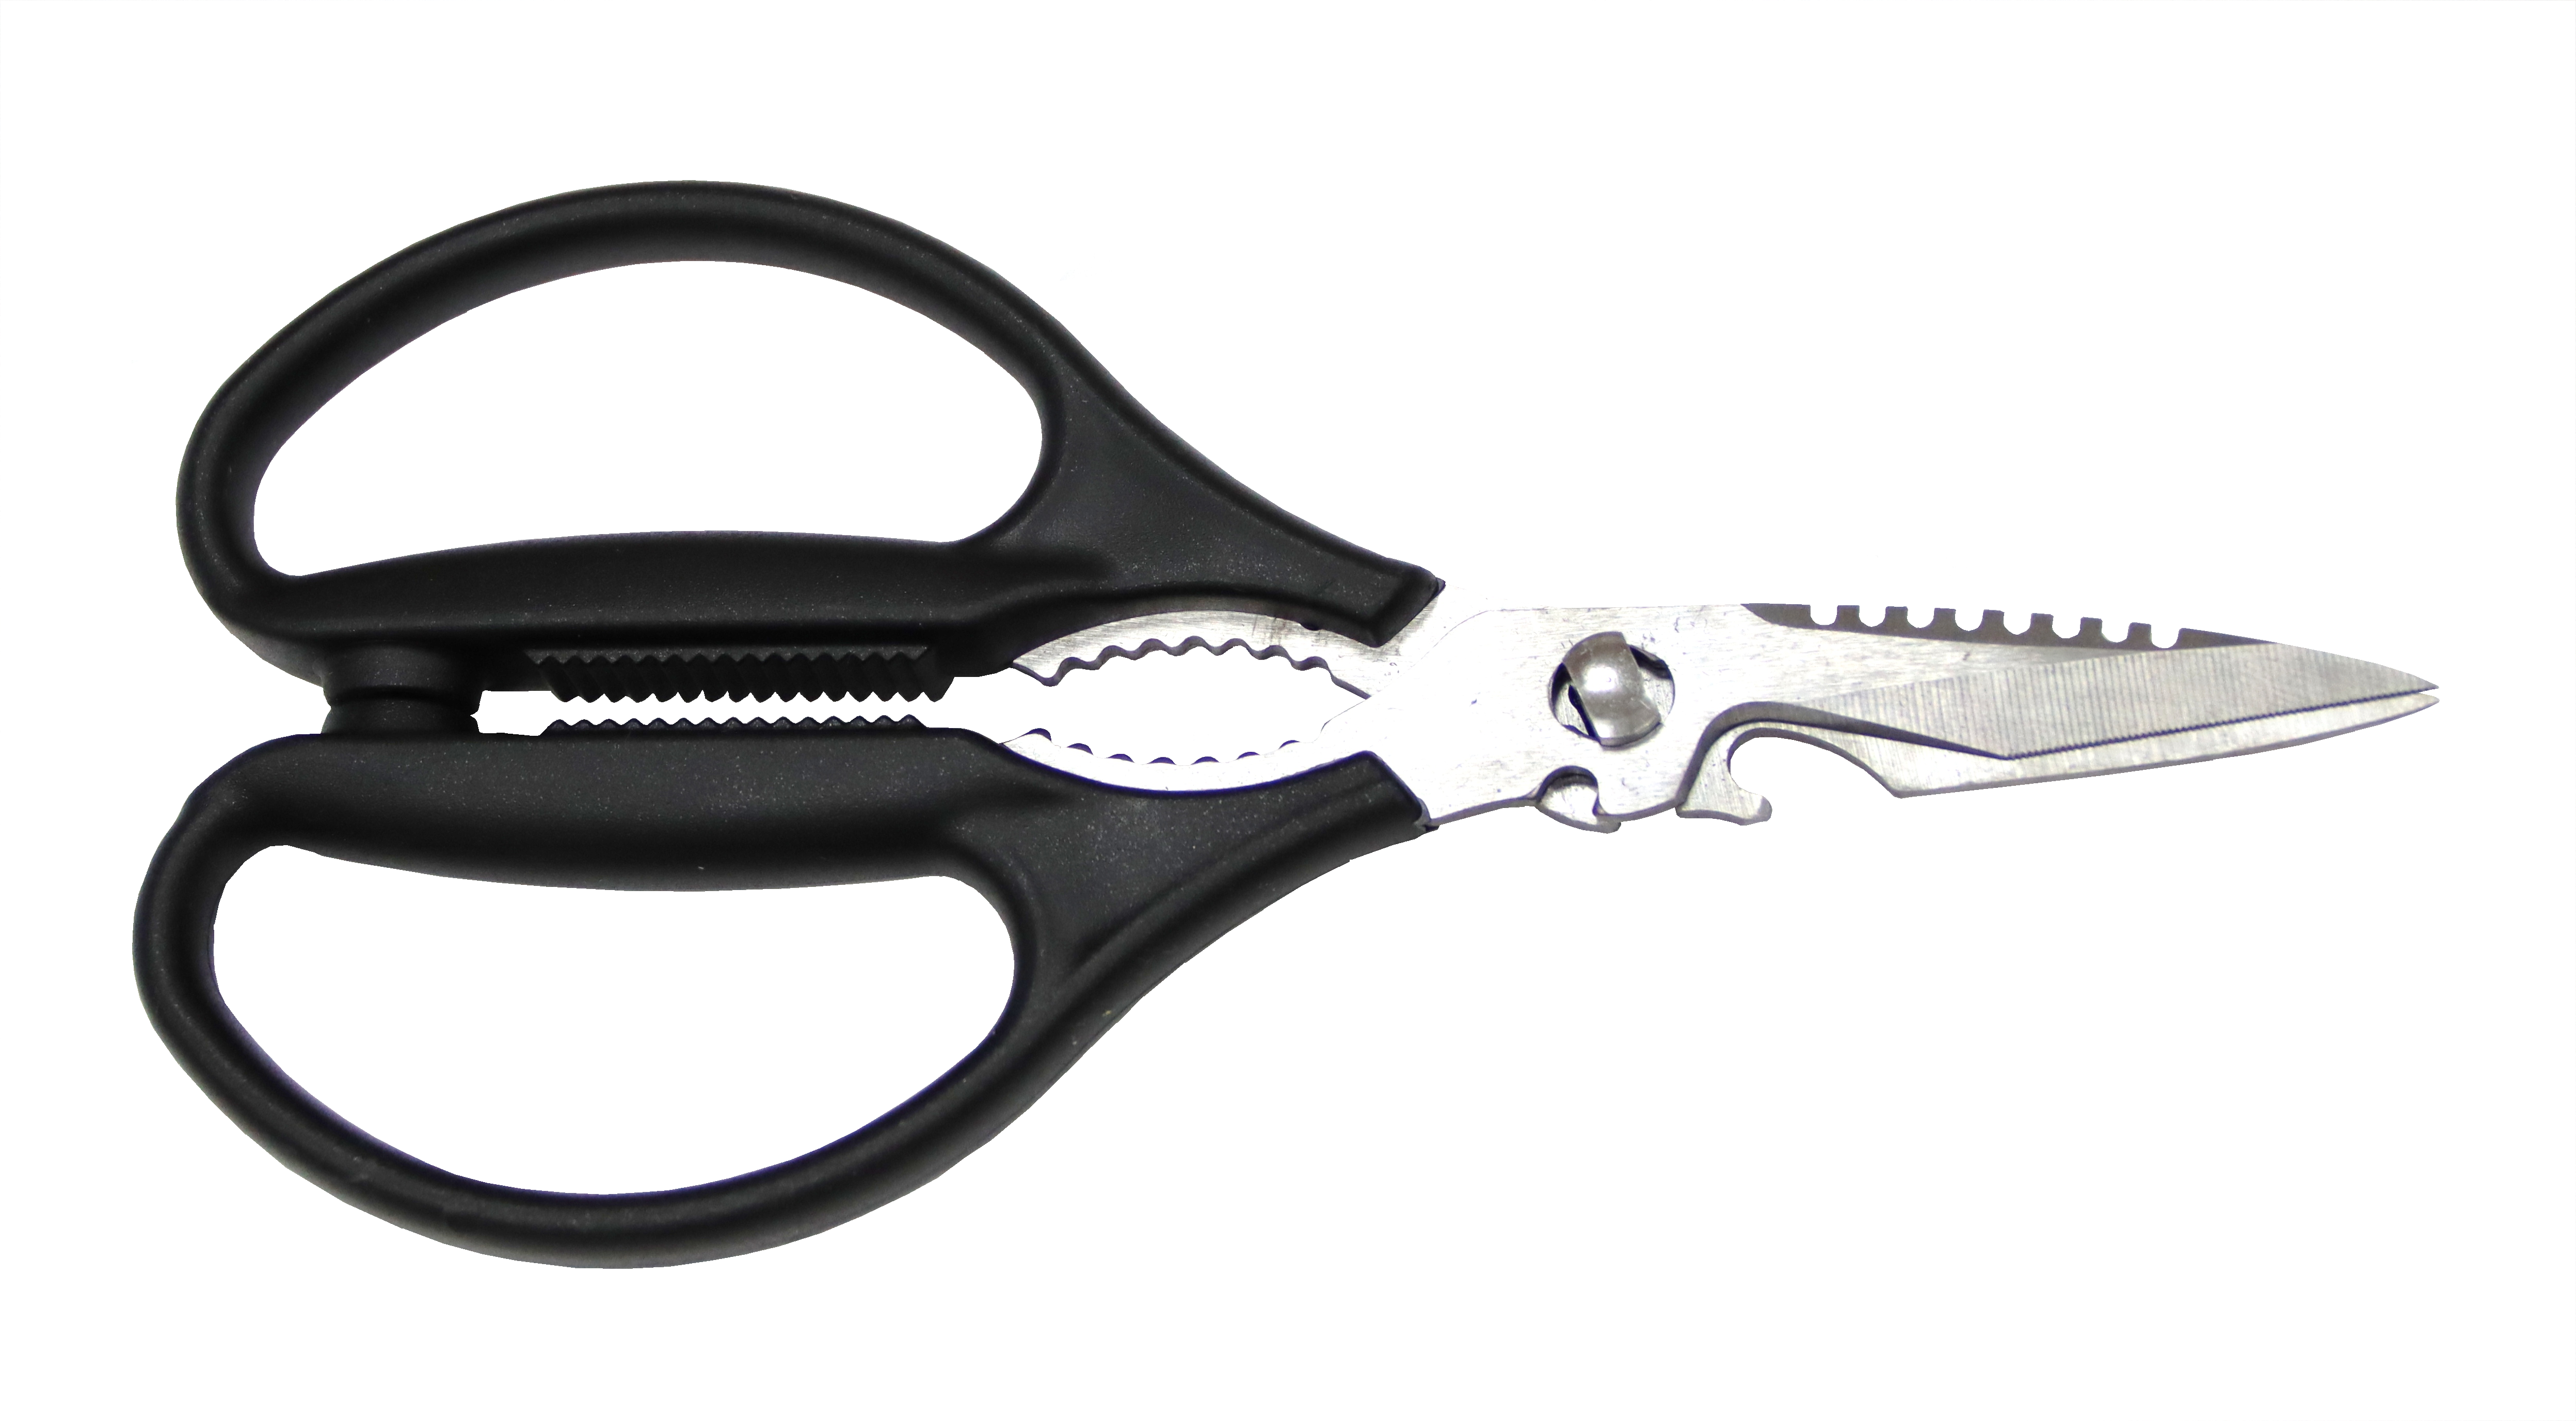 Minitype Detachable Multi-function Scissors